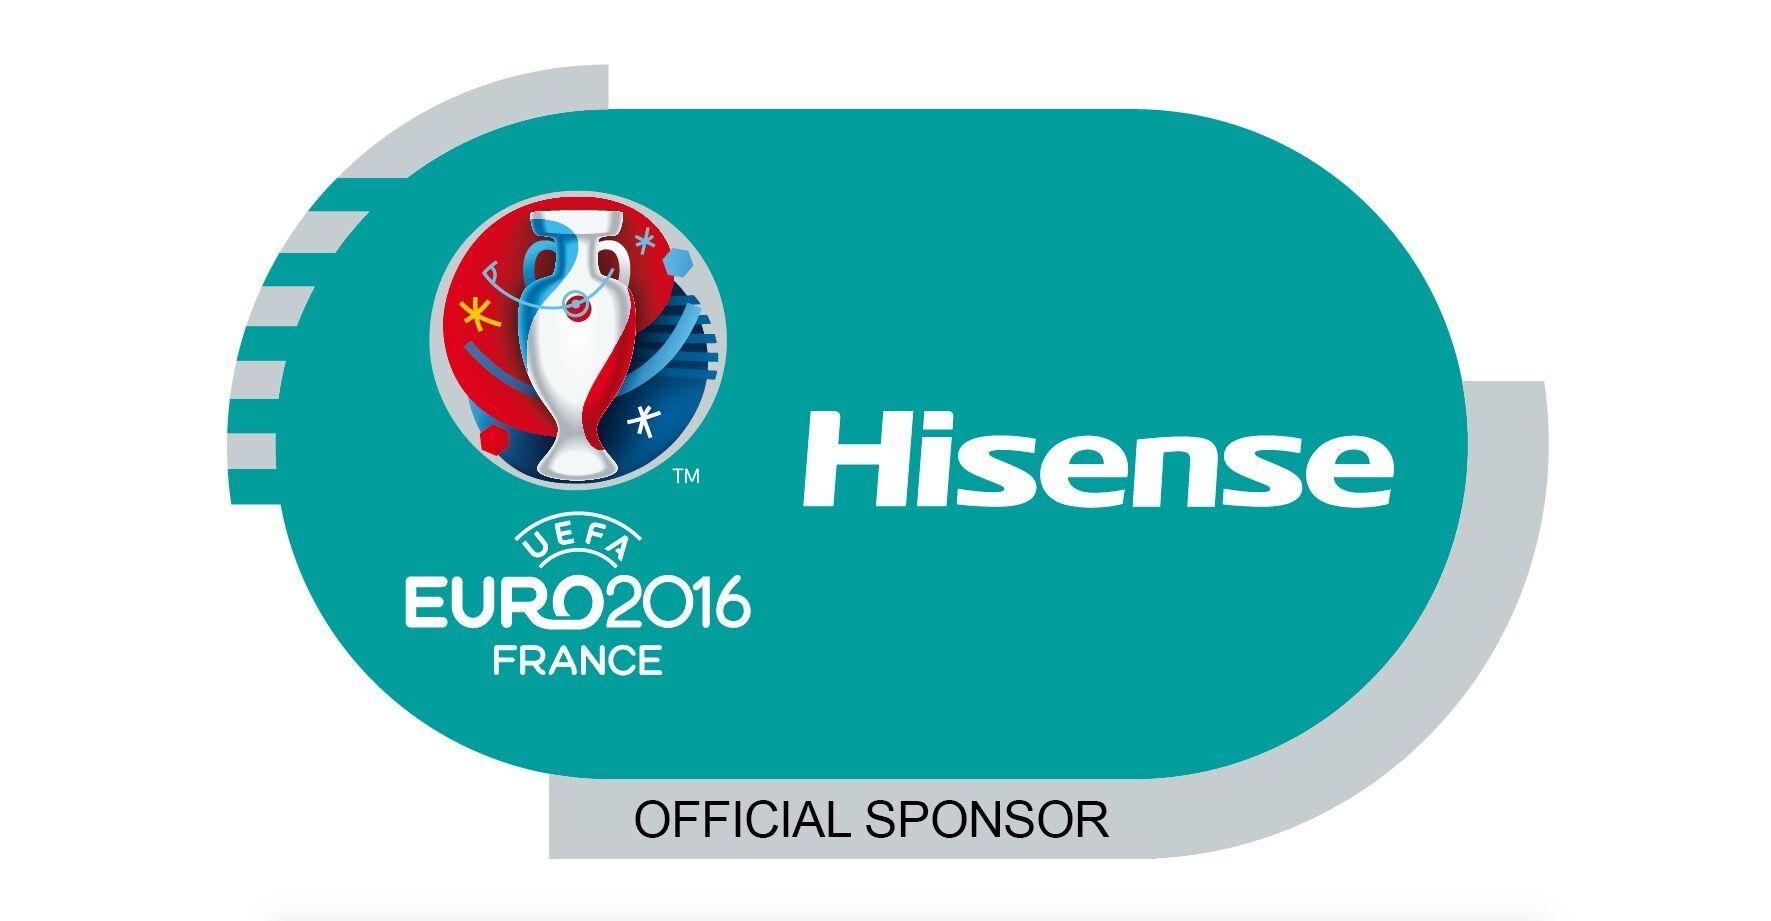 Hisense Logo - Image - UEFA-Hisense-Logo-01.jpg | Logopedia | FANDOM powered by Wikia